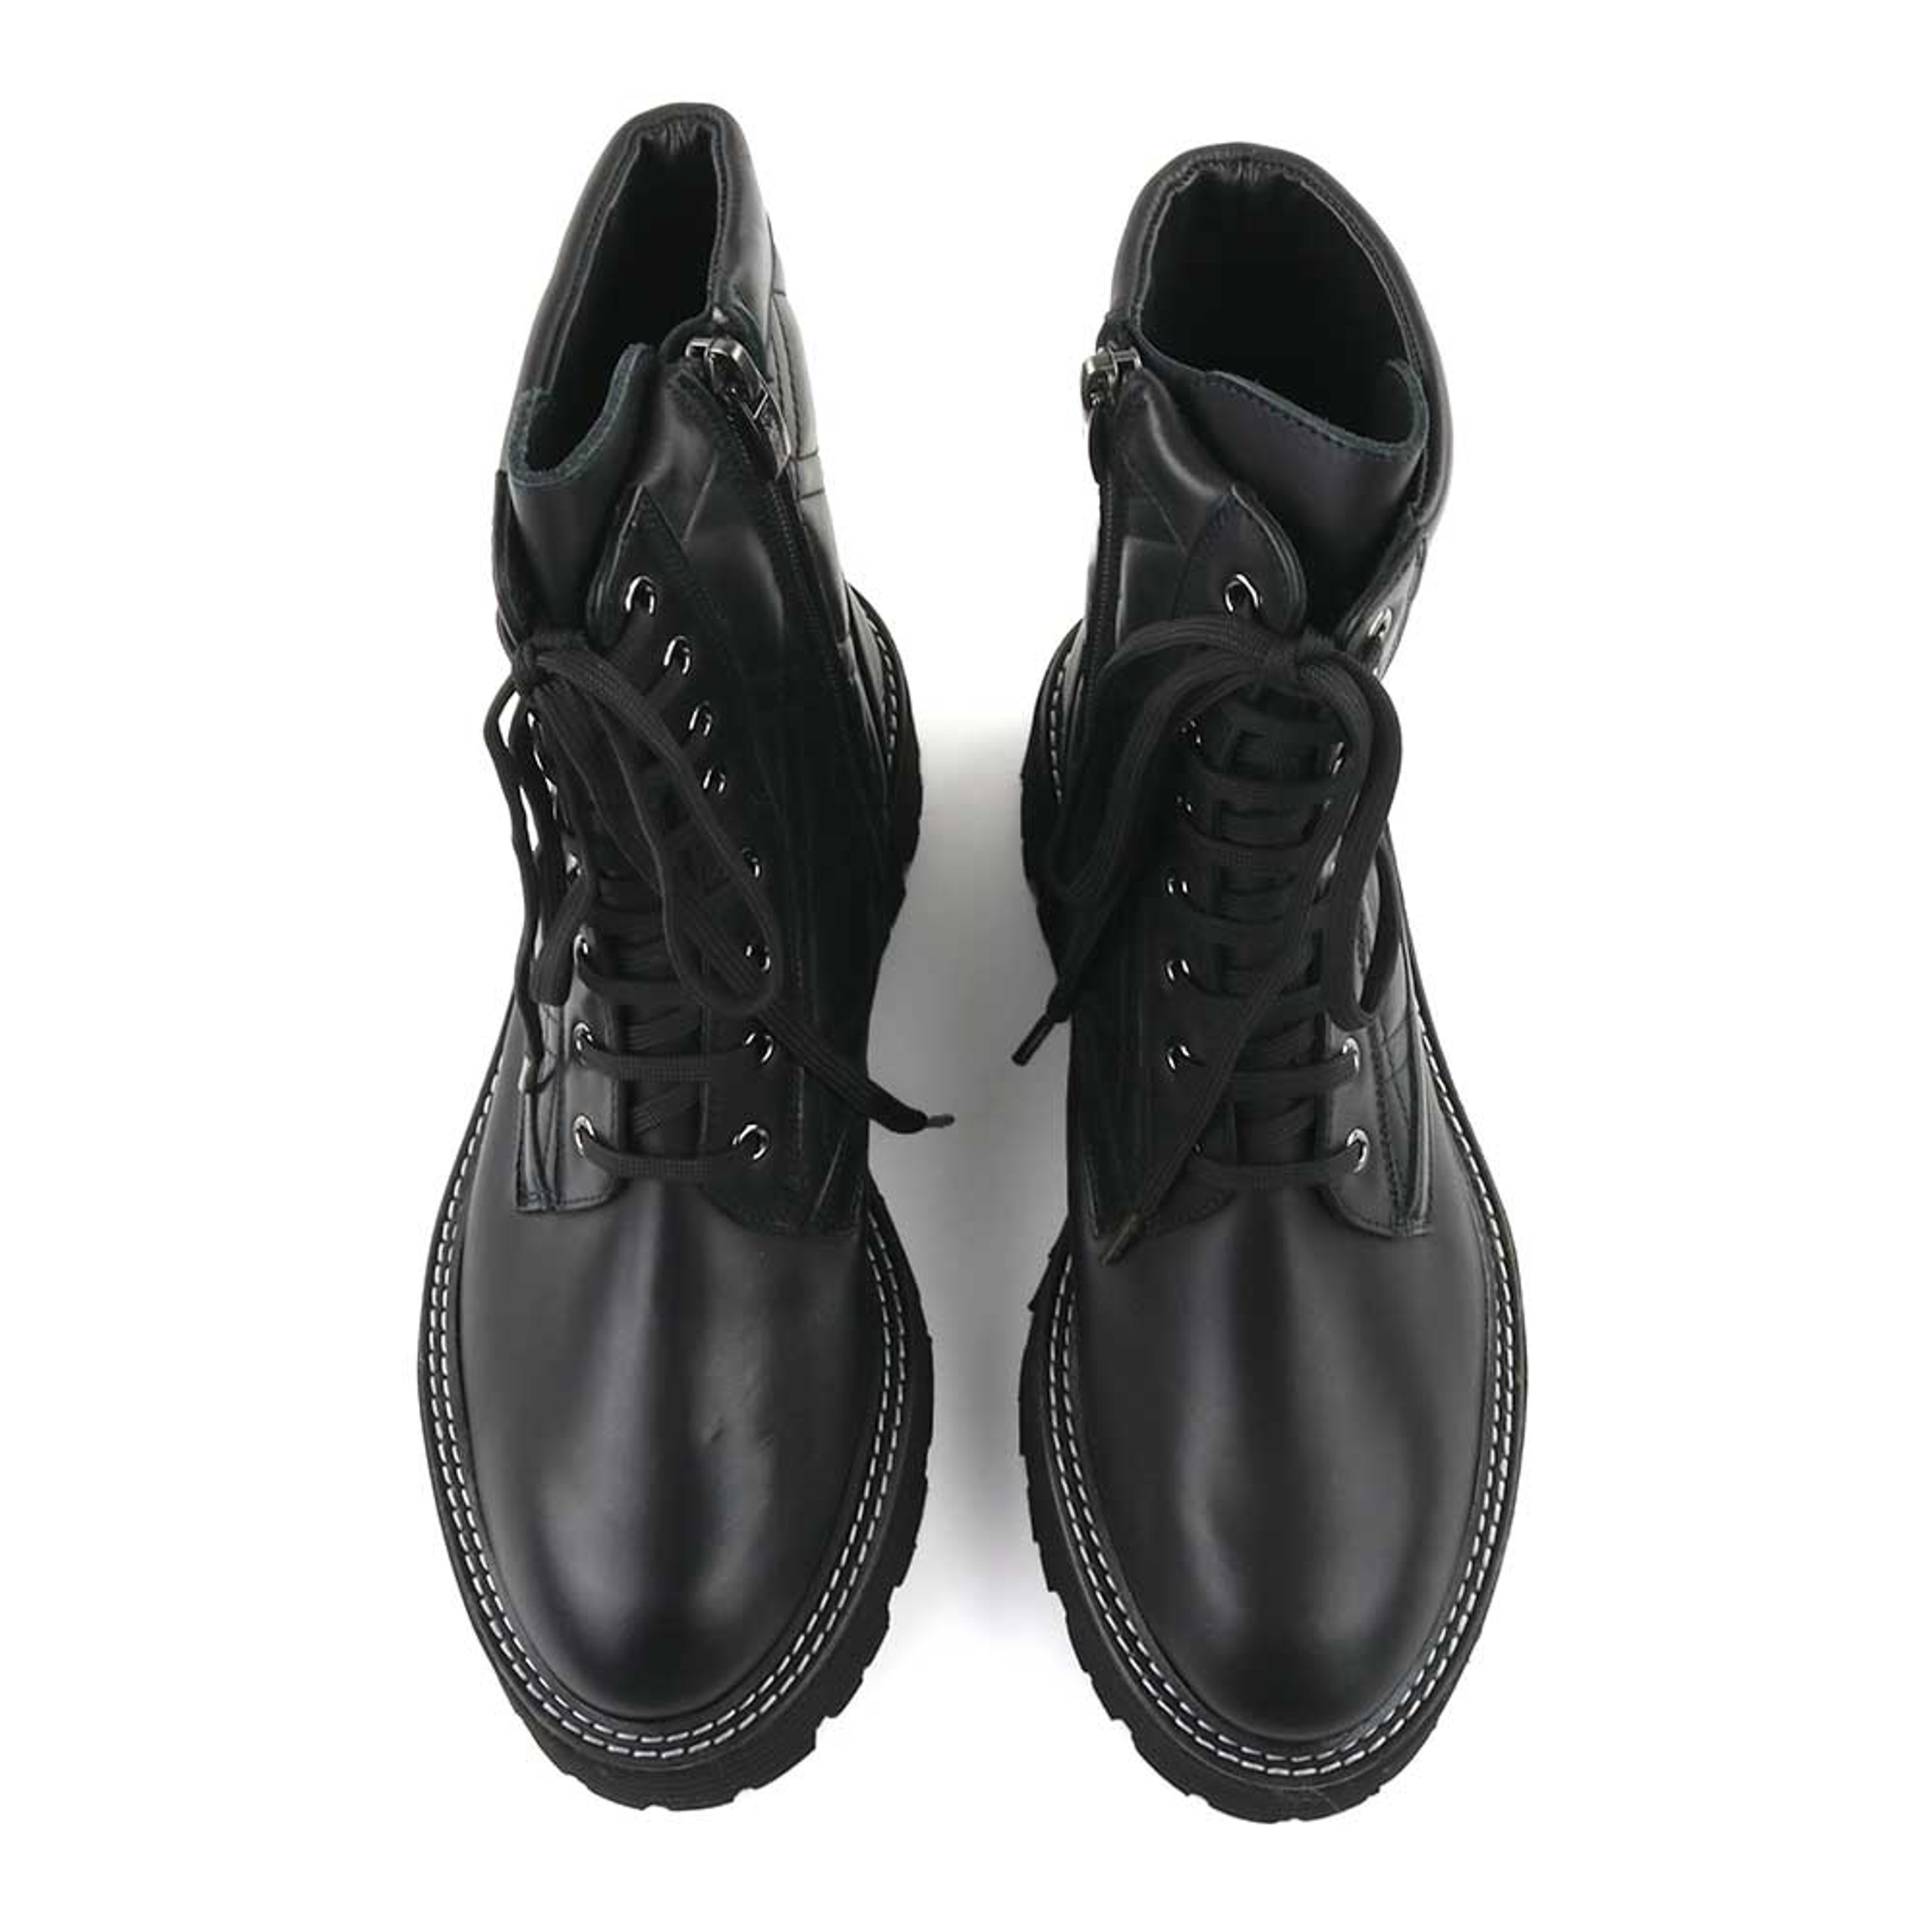 La Canadienne Yasmine Boot in Black Leather | Hanig's Footwear